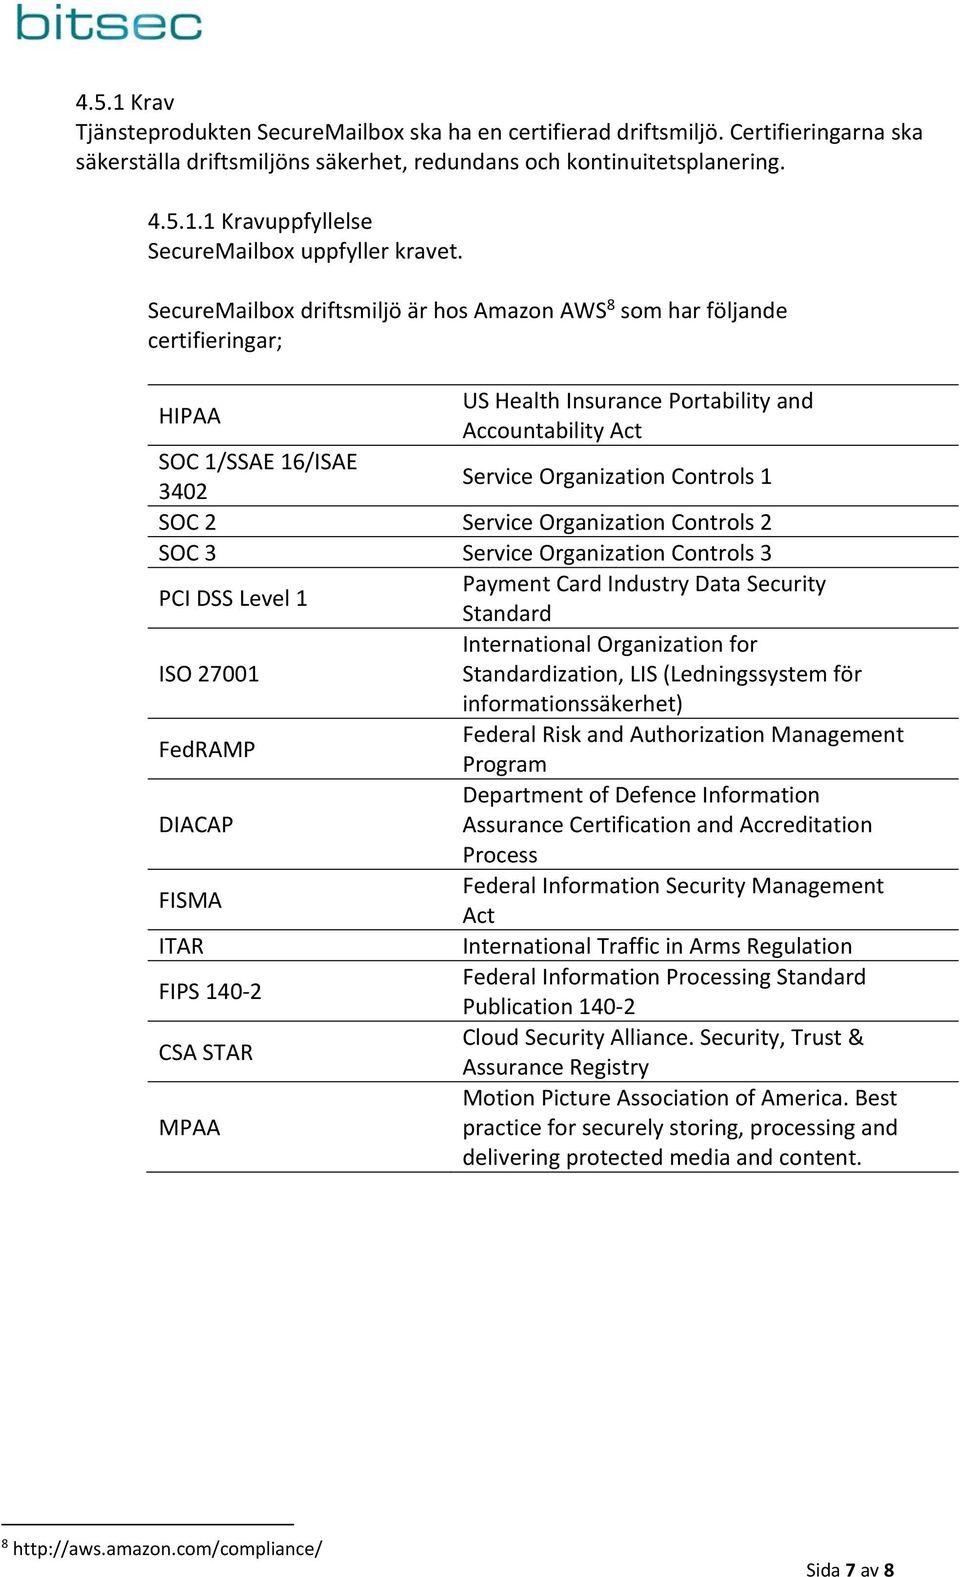 1 Kravuppfyllelse SecureMailbox driftsmiljö är hos Amazon AWS 8 som har följande certifieringar; HIPAA US Health Insurance Portability and Accountability Act SOC 1/SSAE 16/ISAE 3402 Service